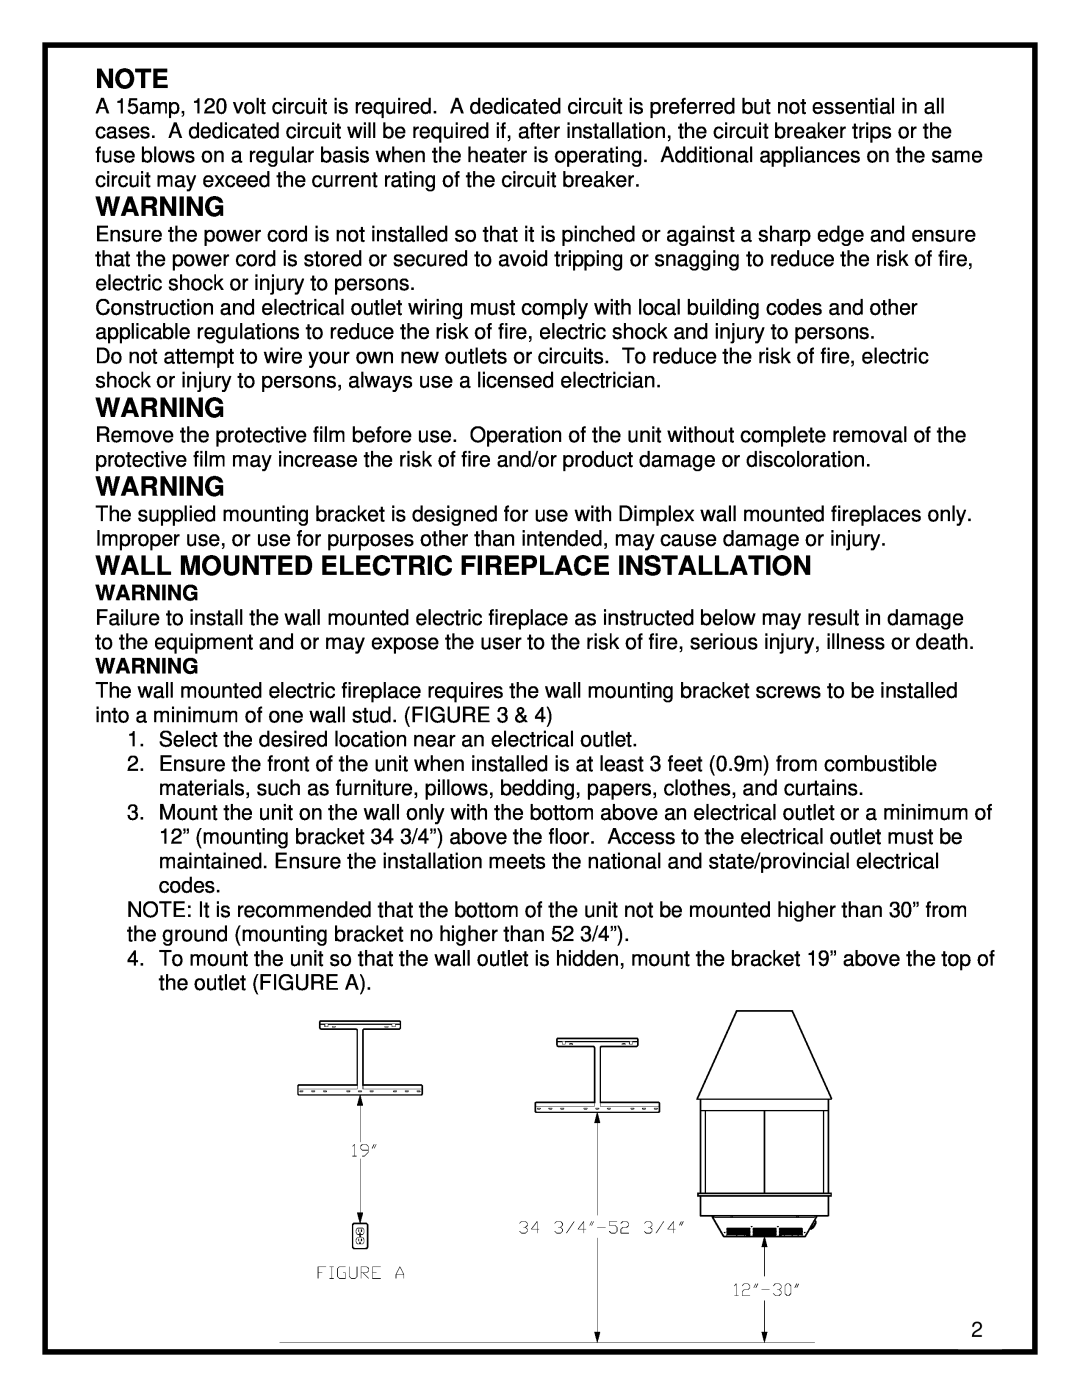 Dimplex EWM-SS-BLK, EWM-COPPER manual Wall Mounted Electric Fireplace Installation 